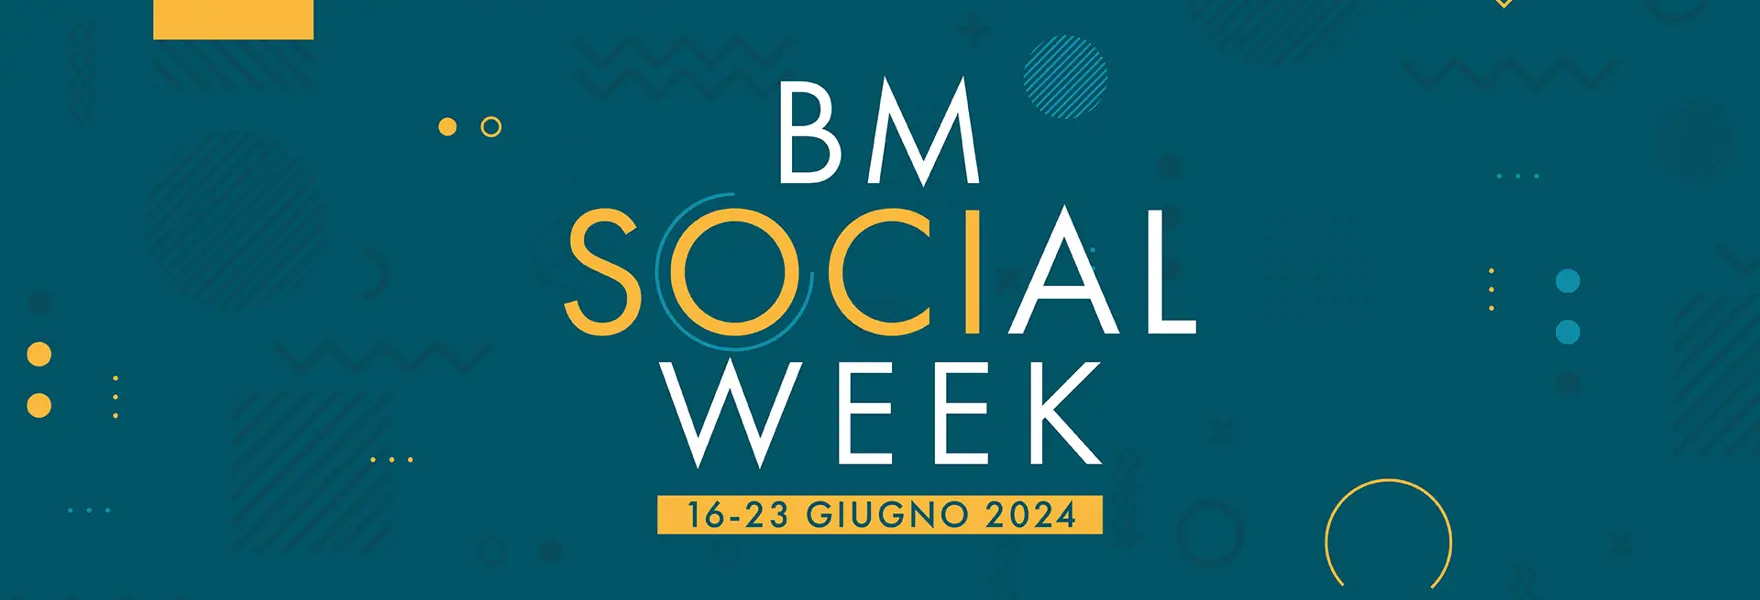 BM Social Week Slider Sito Pagina Evento 